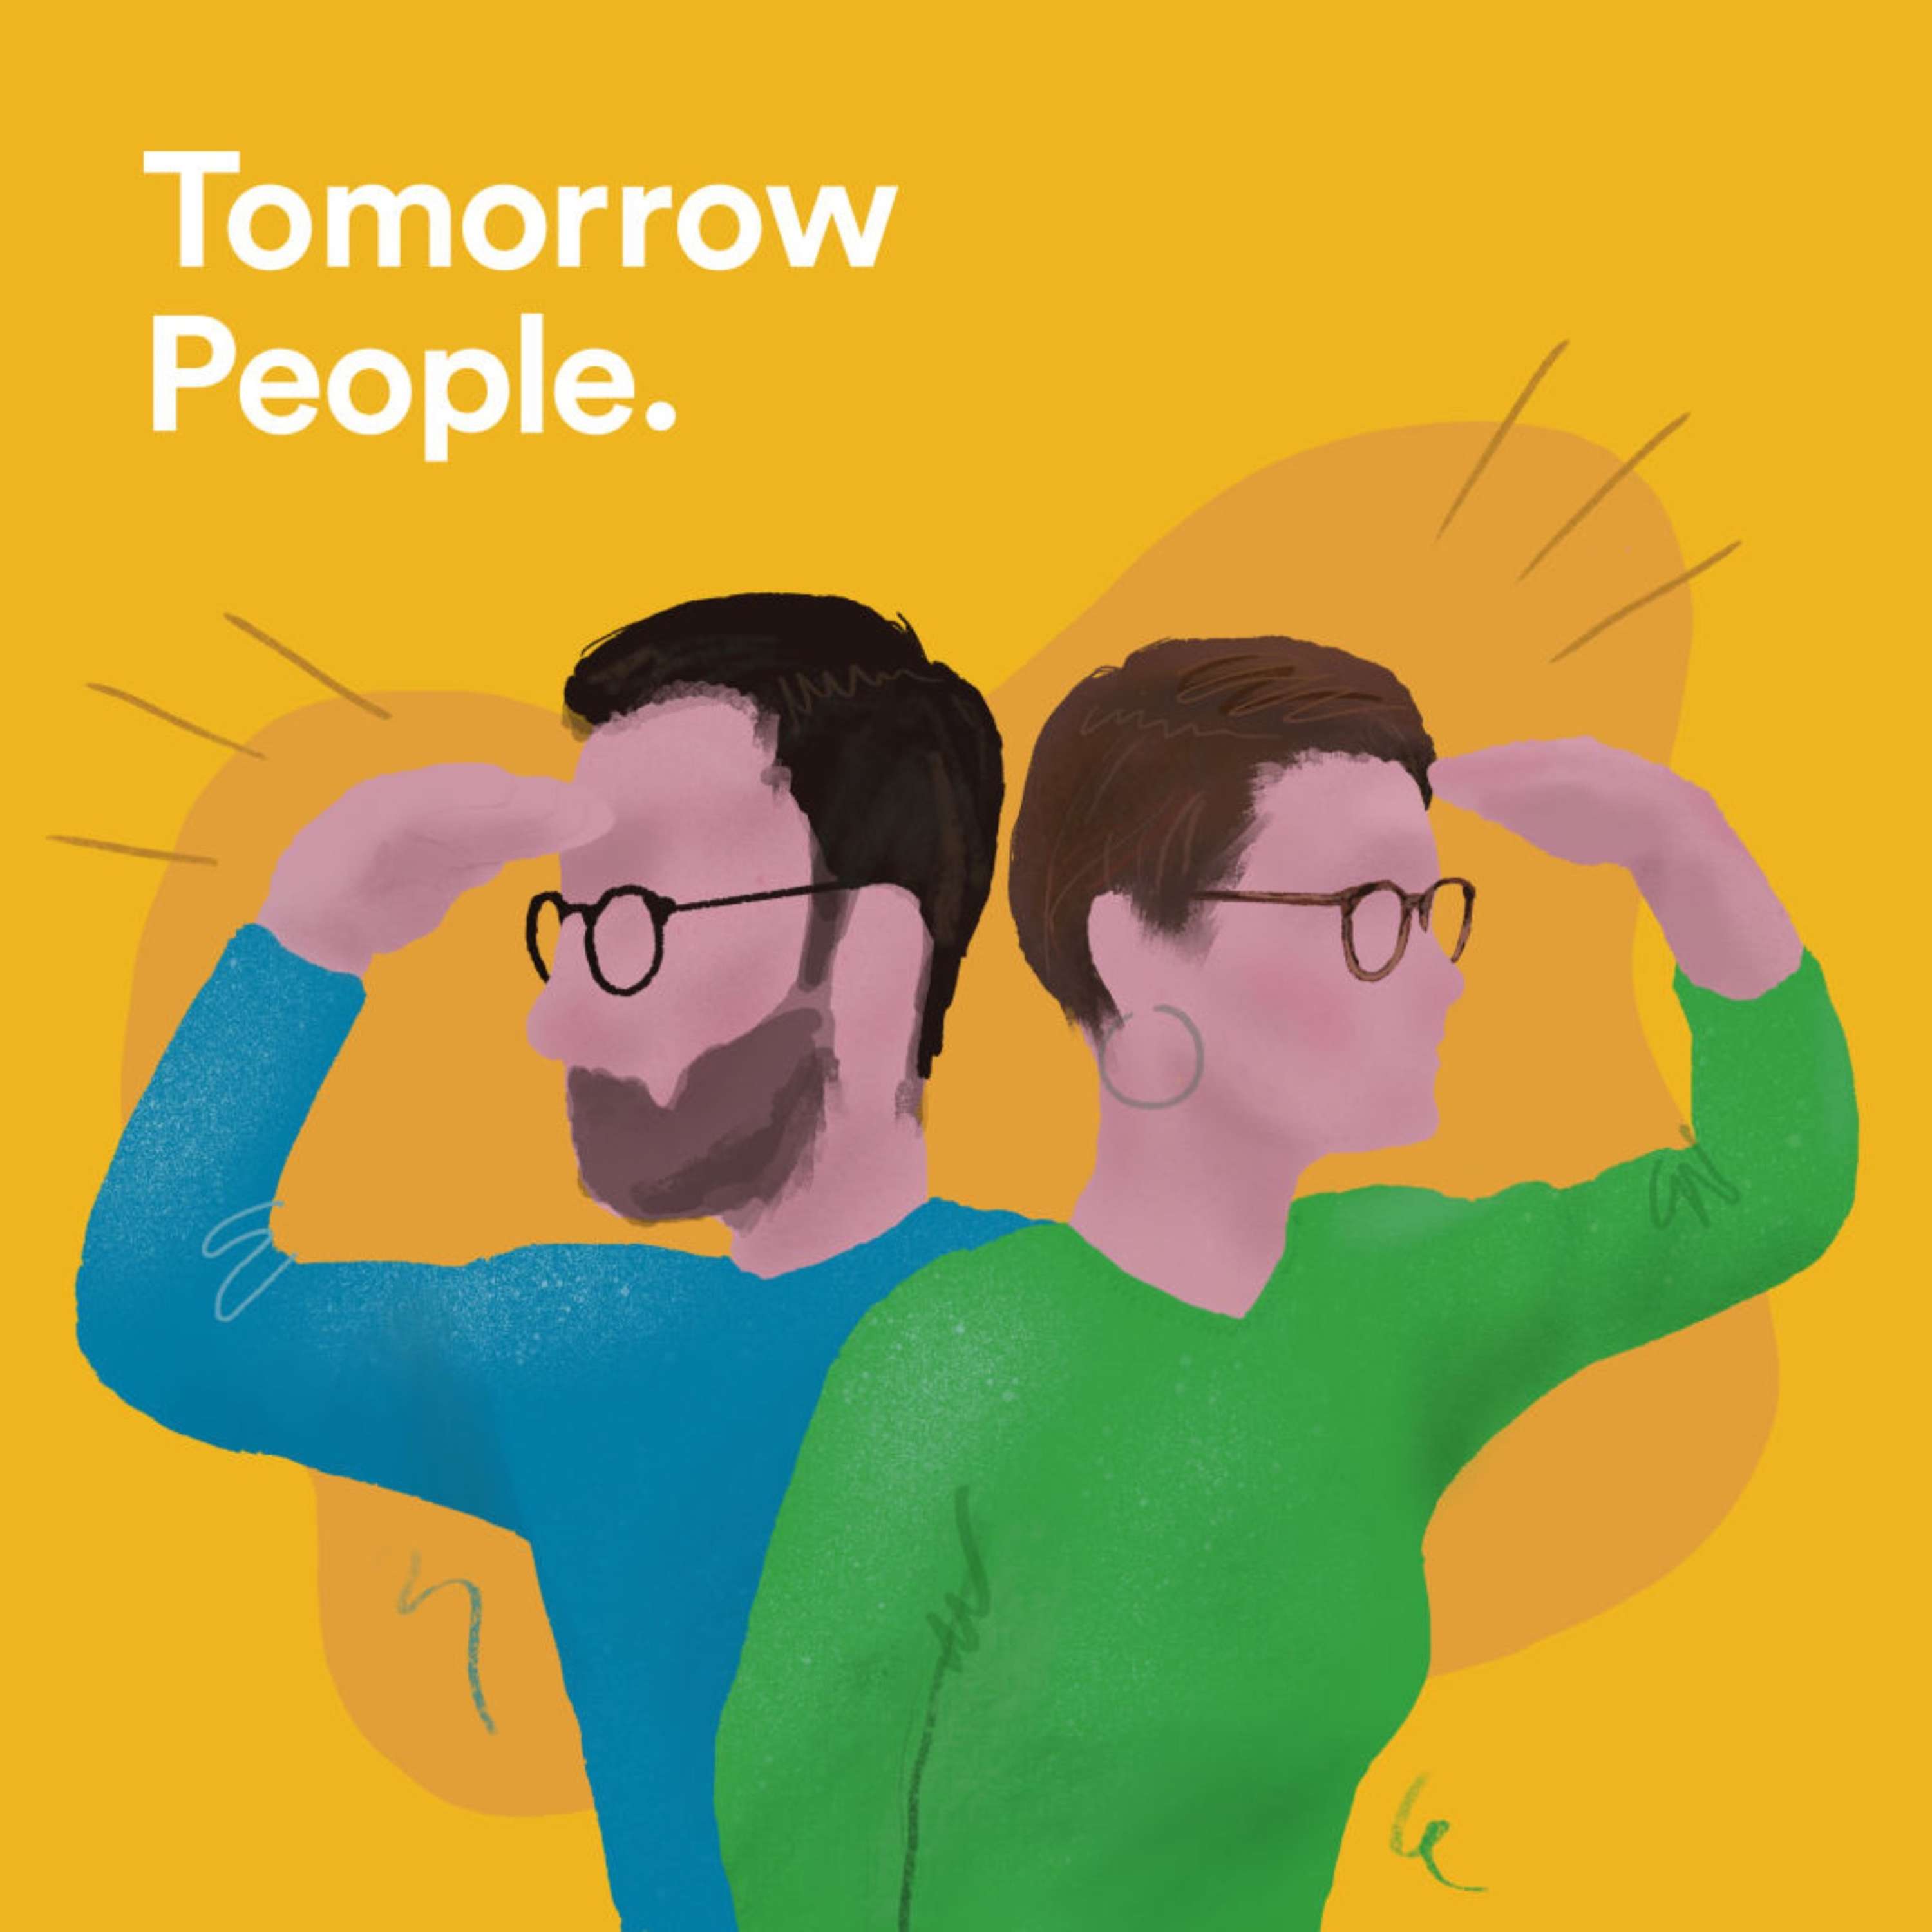 Introducing Tomorrow People